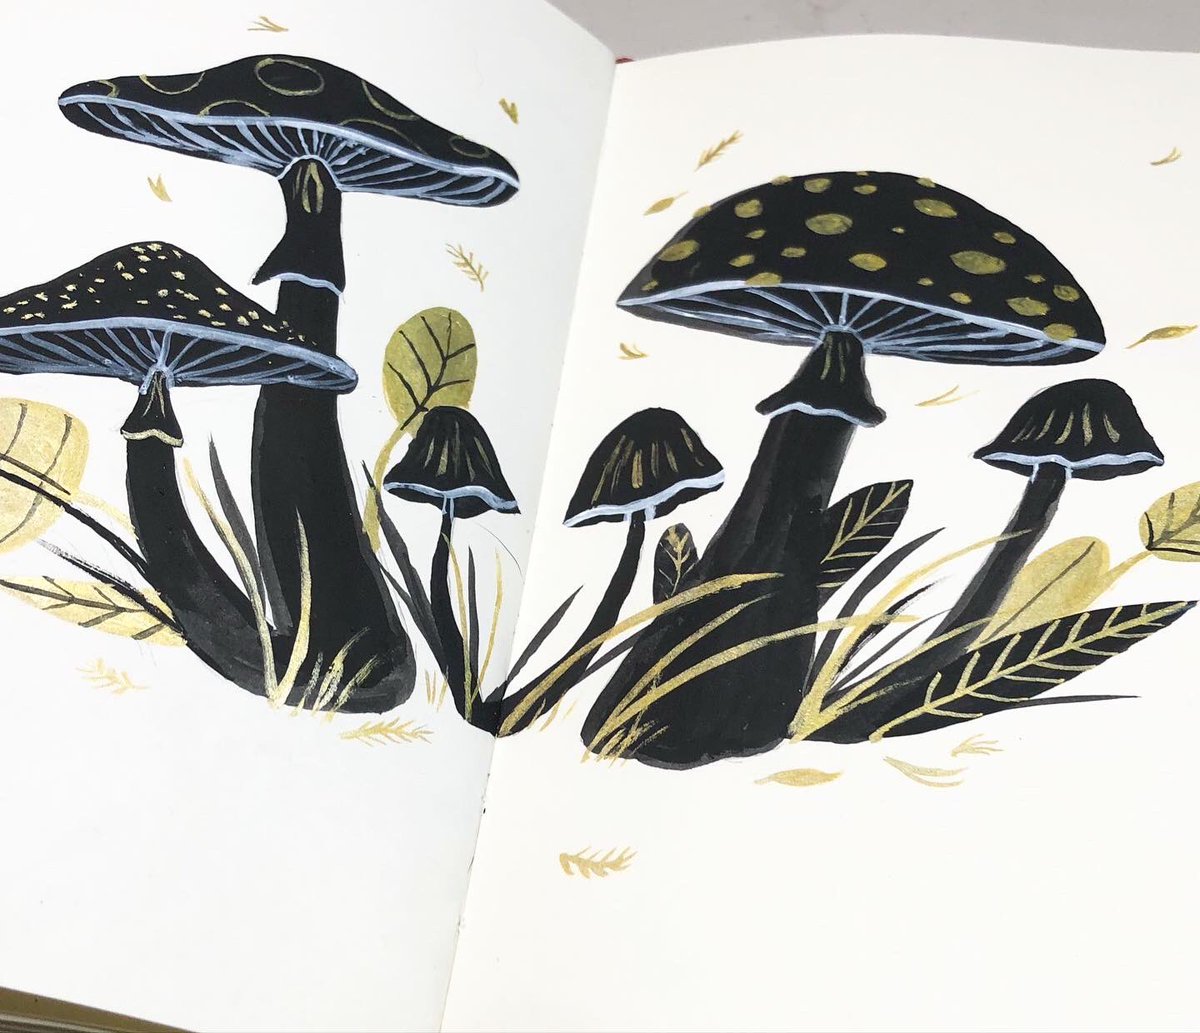 Mushrooms! #illustration #sketchbook #artwork #mushrooms #sketches #painting